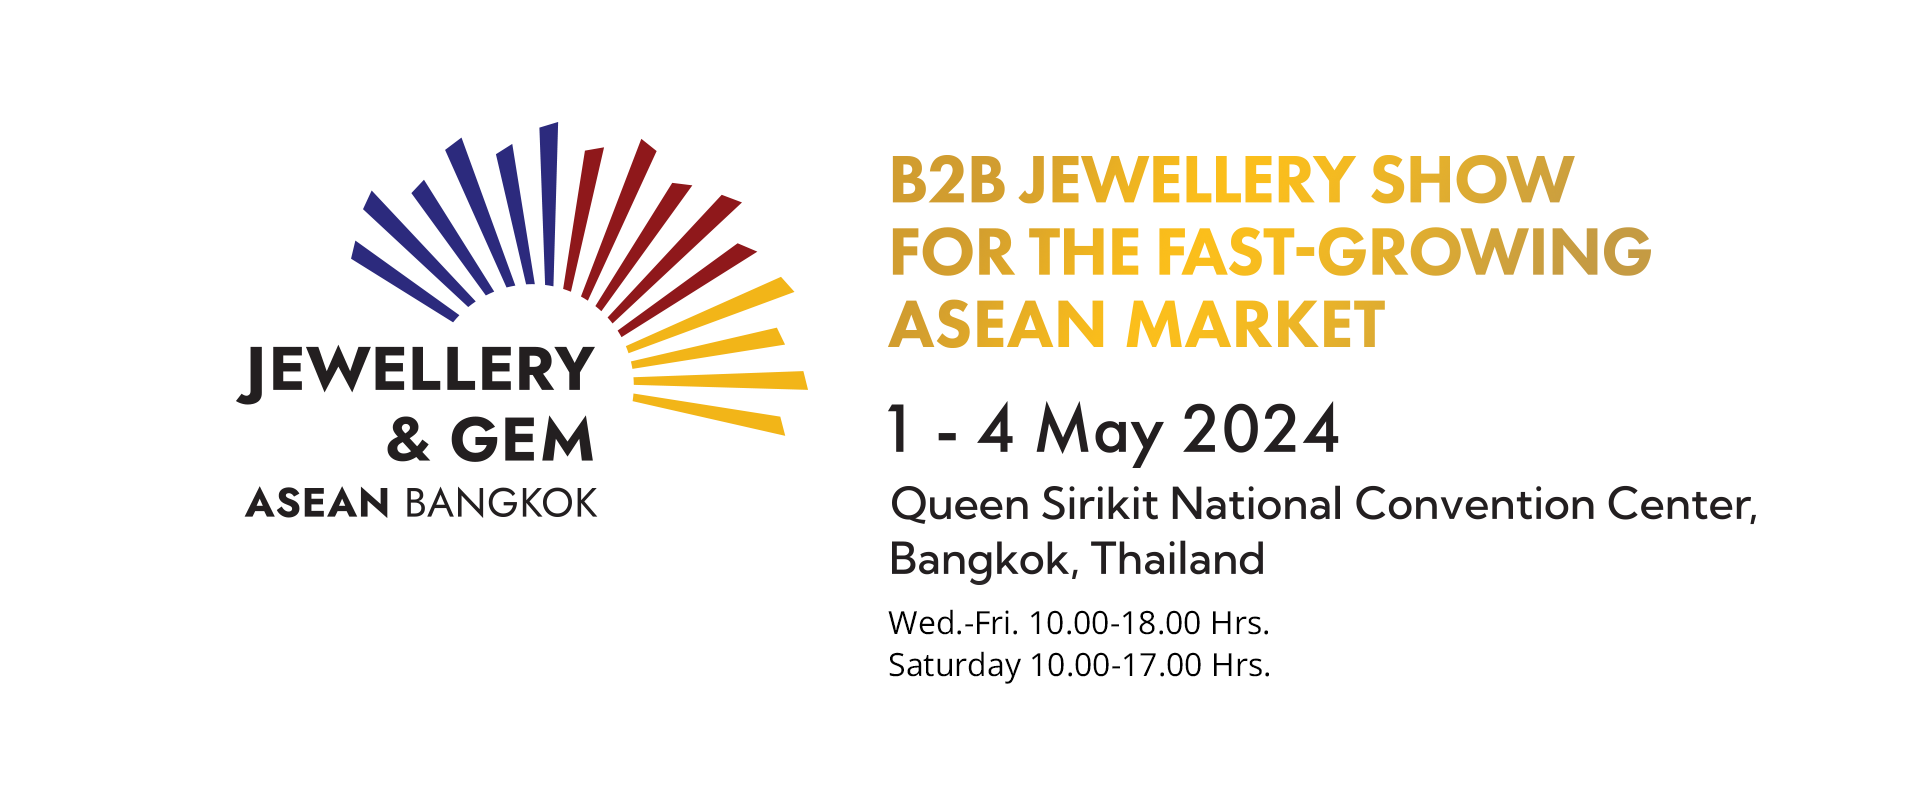 Jewellery & Gem ASEAN Bangkok